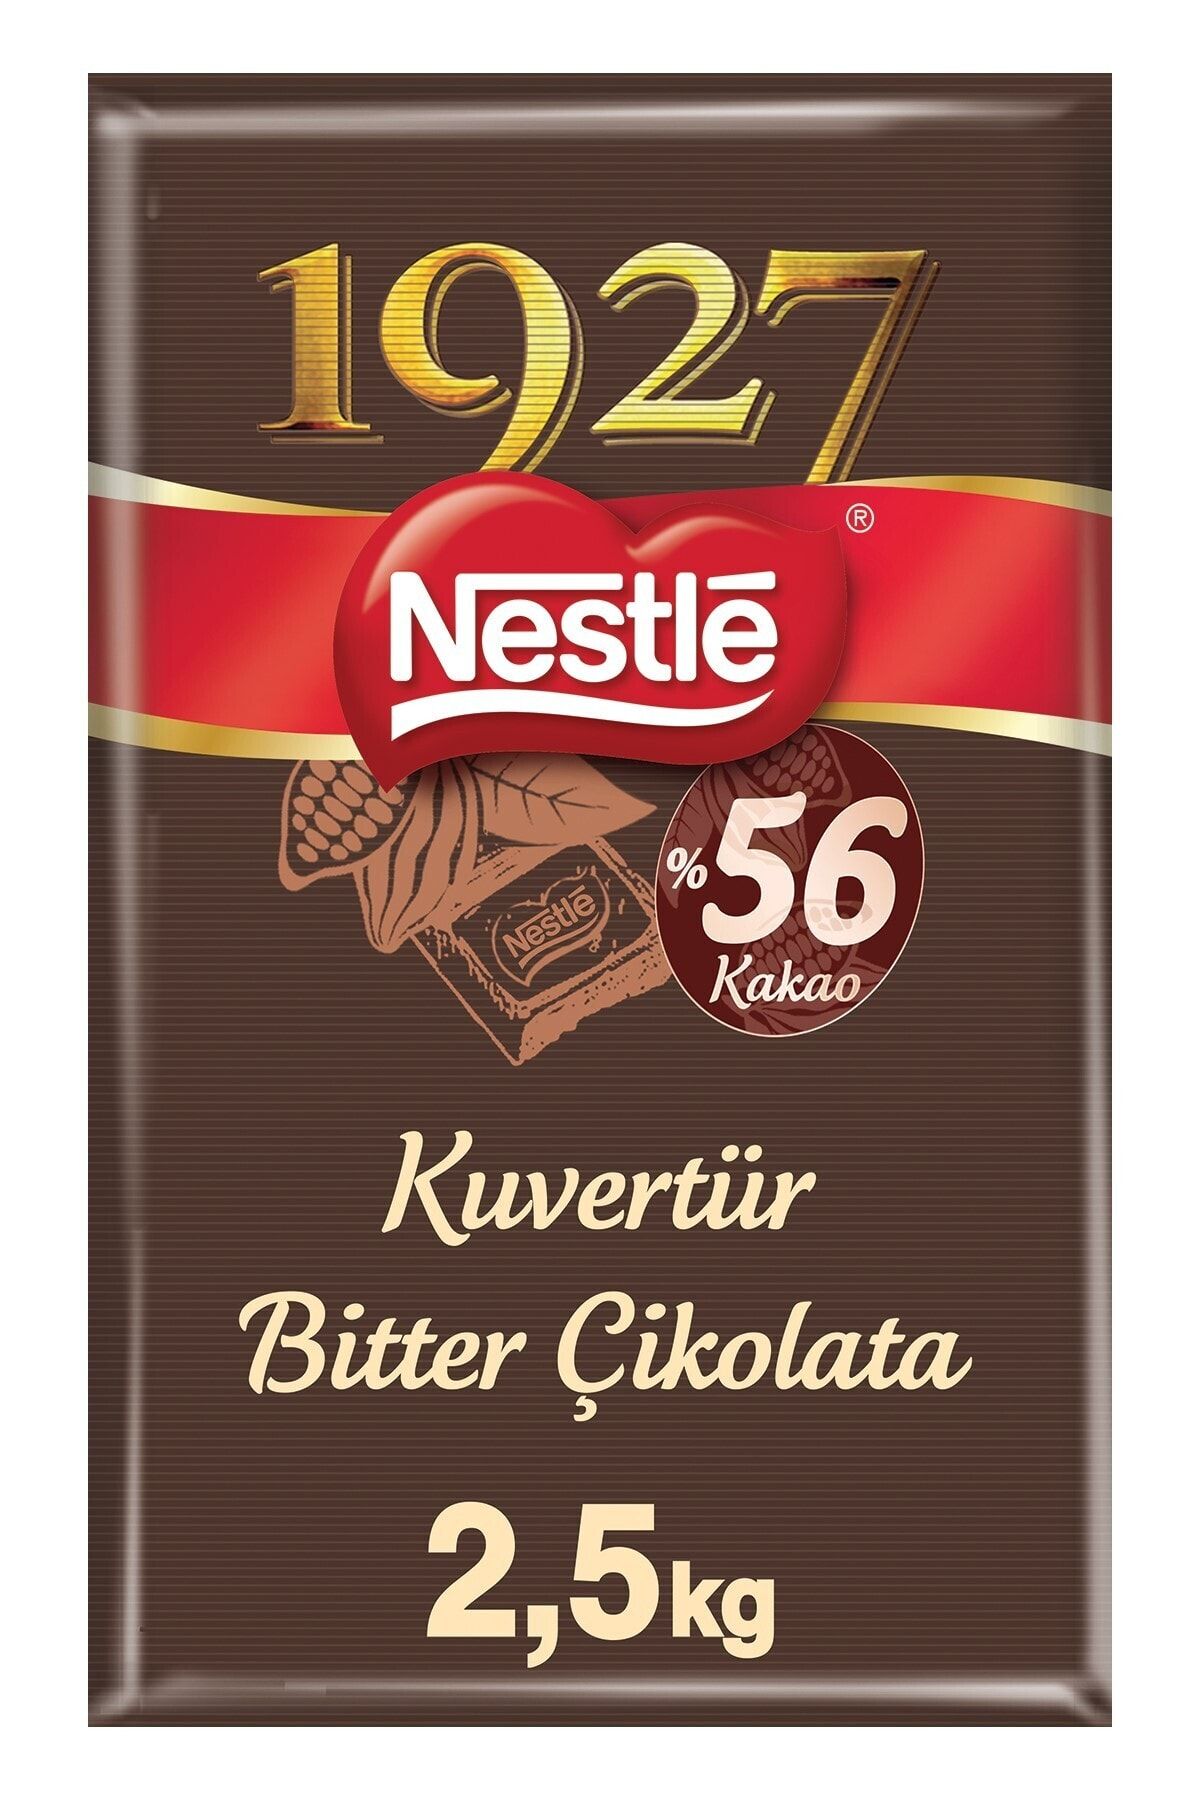 Nestle 1927 Kuvertür Bitter Çikolata 2,5kg